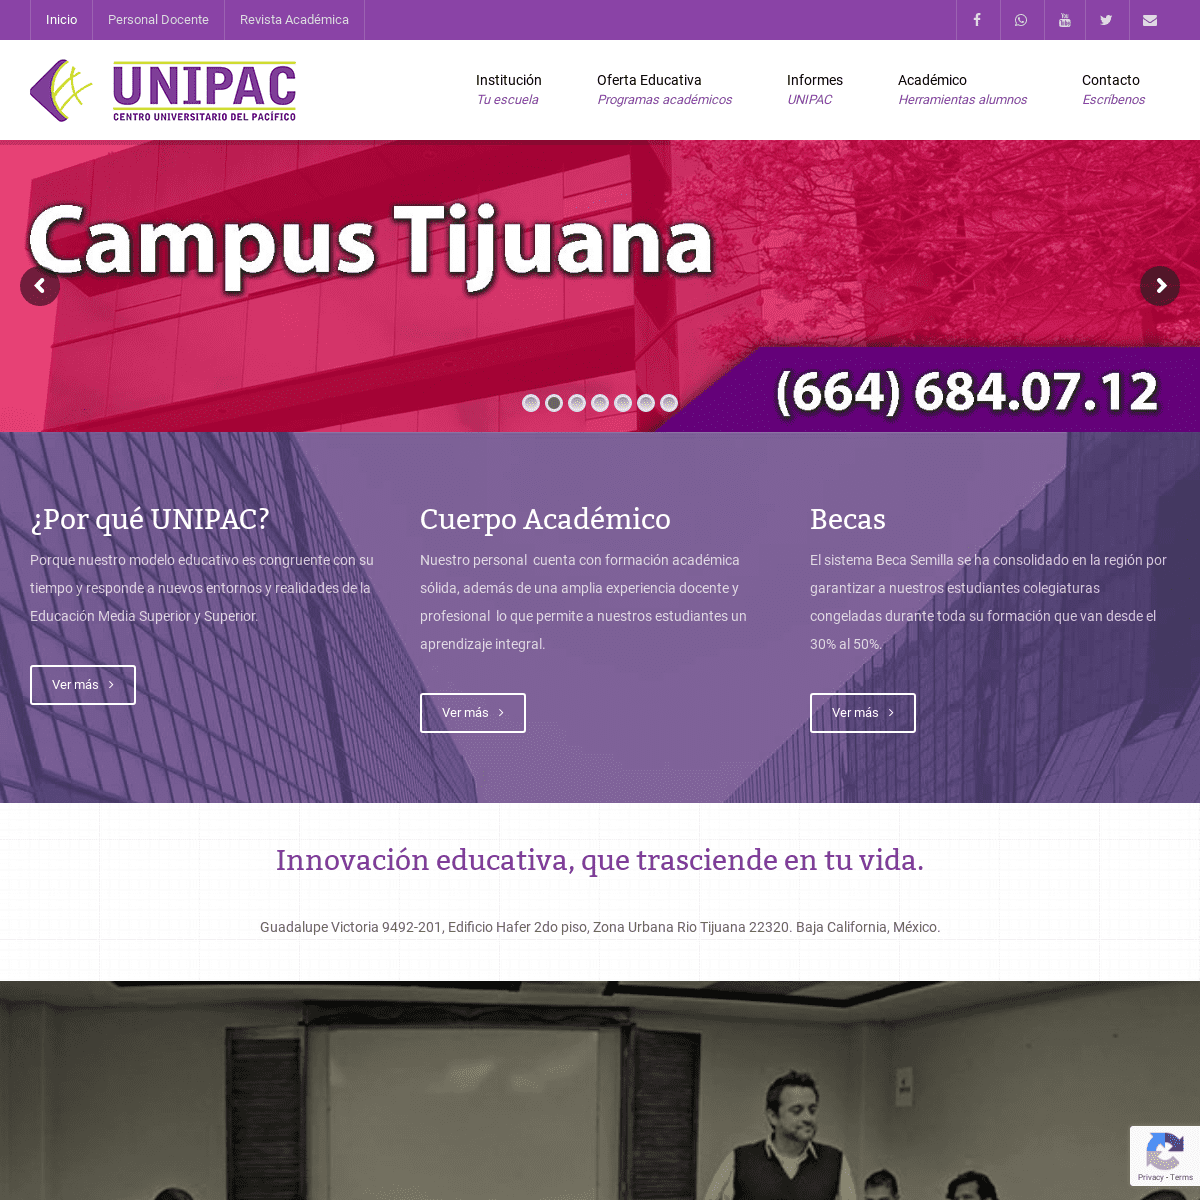 A complete backup of unipac.edu.mx